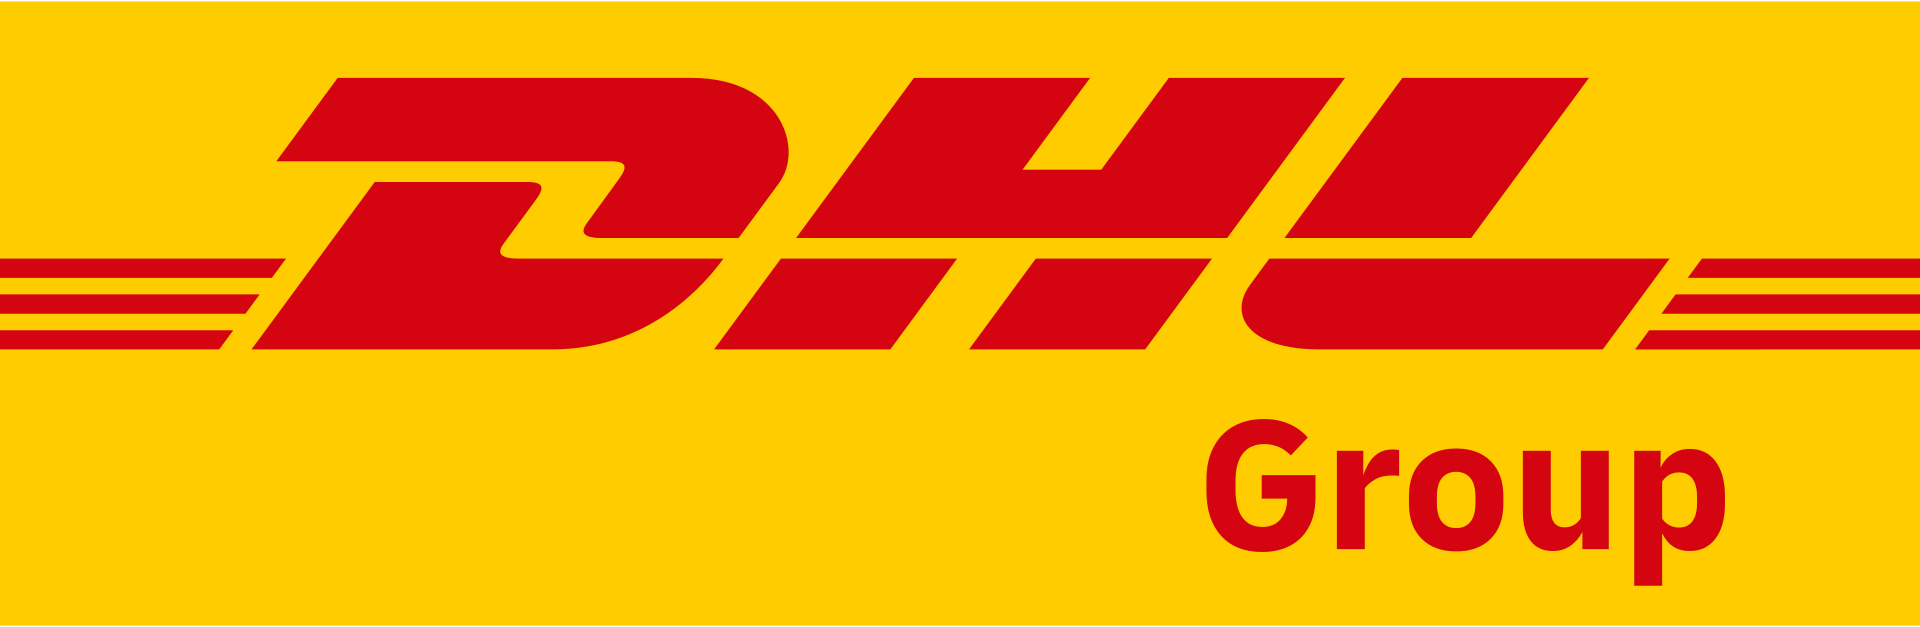 DHL Europa